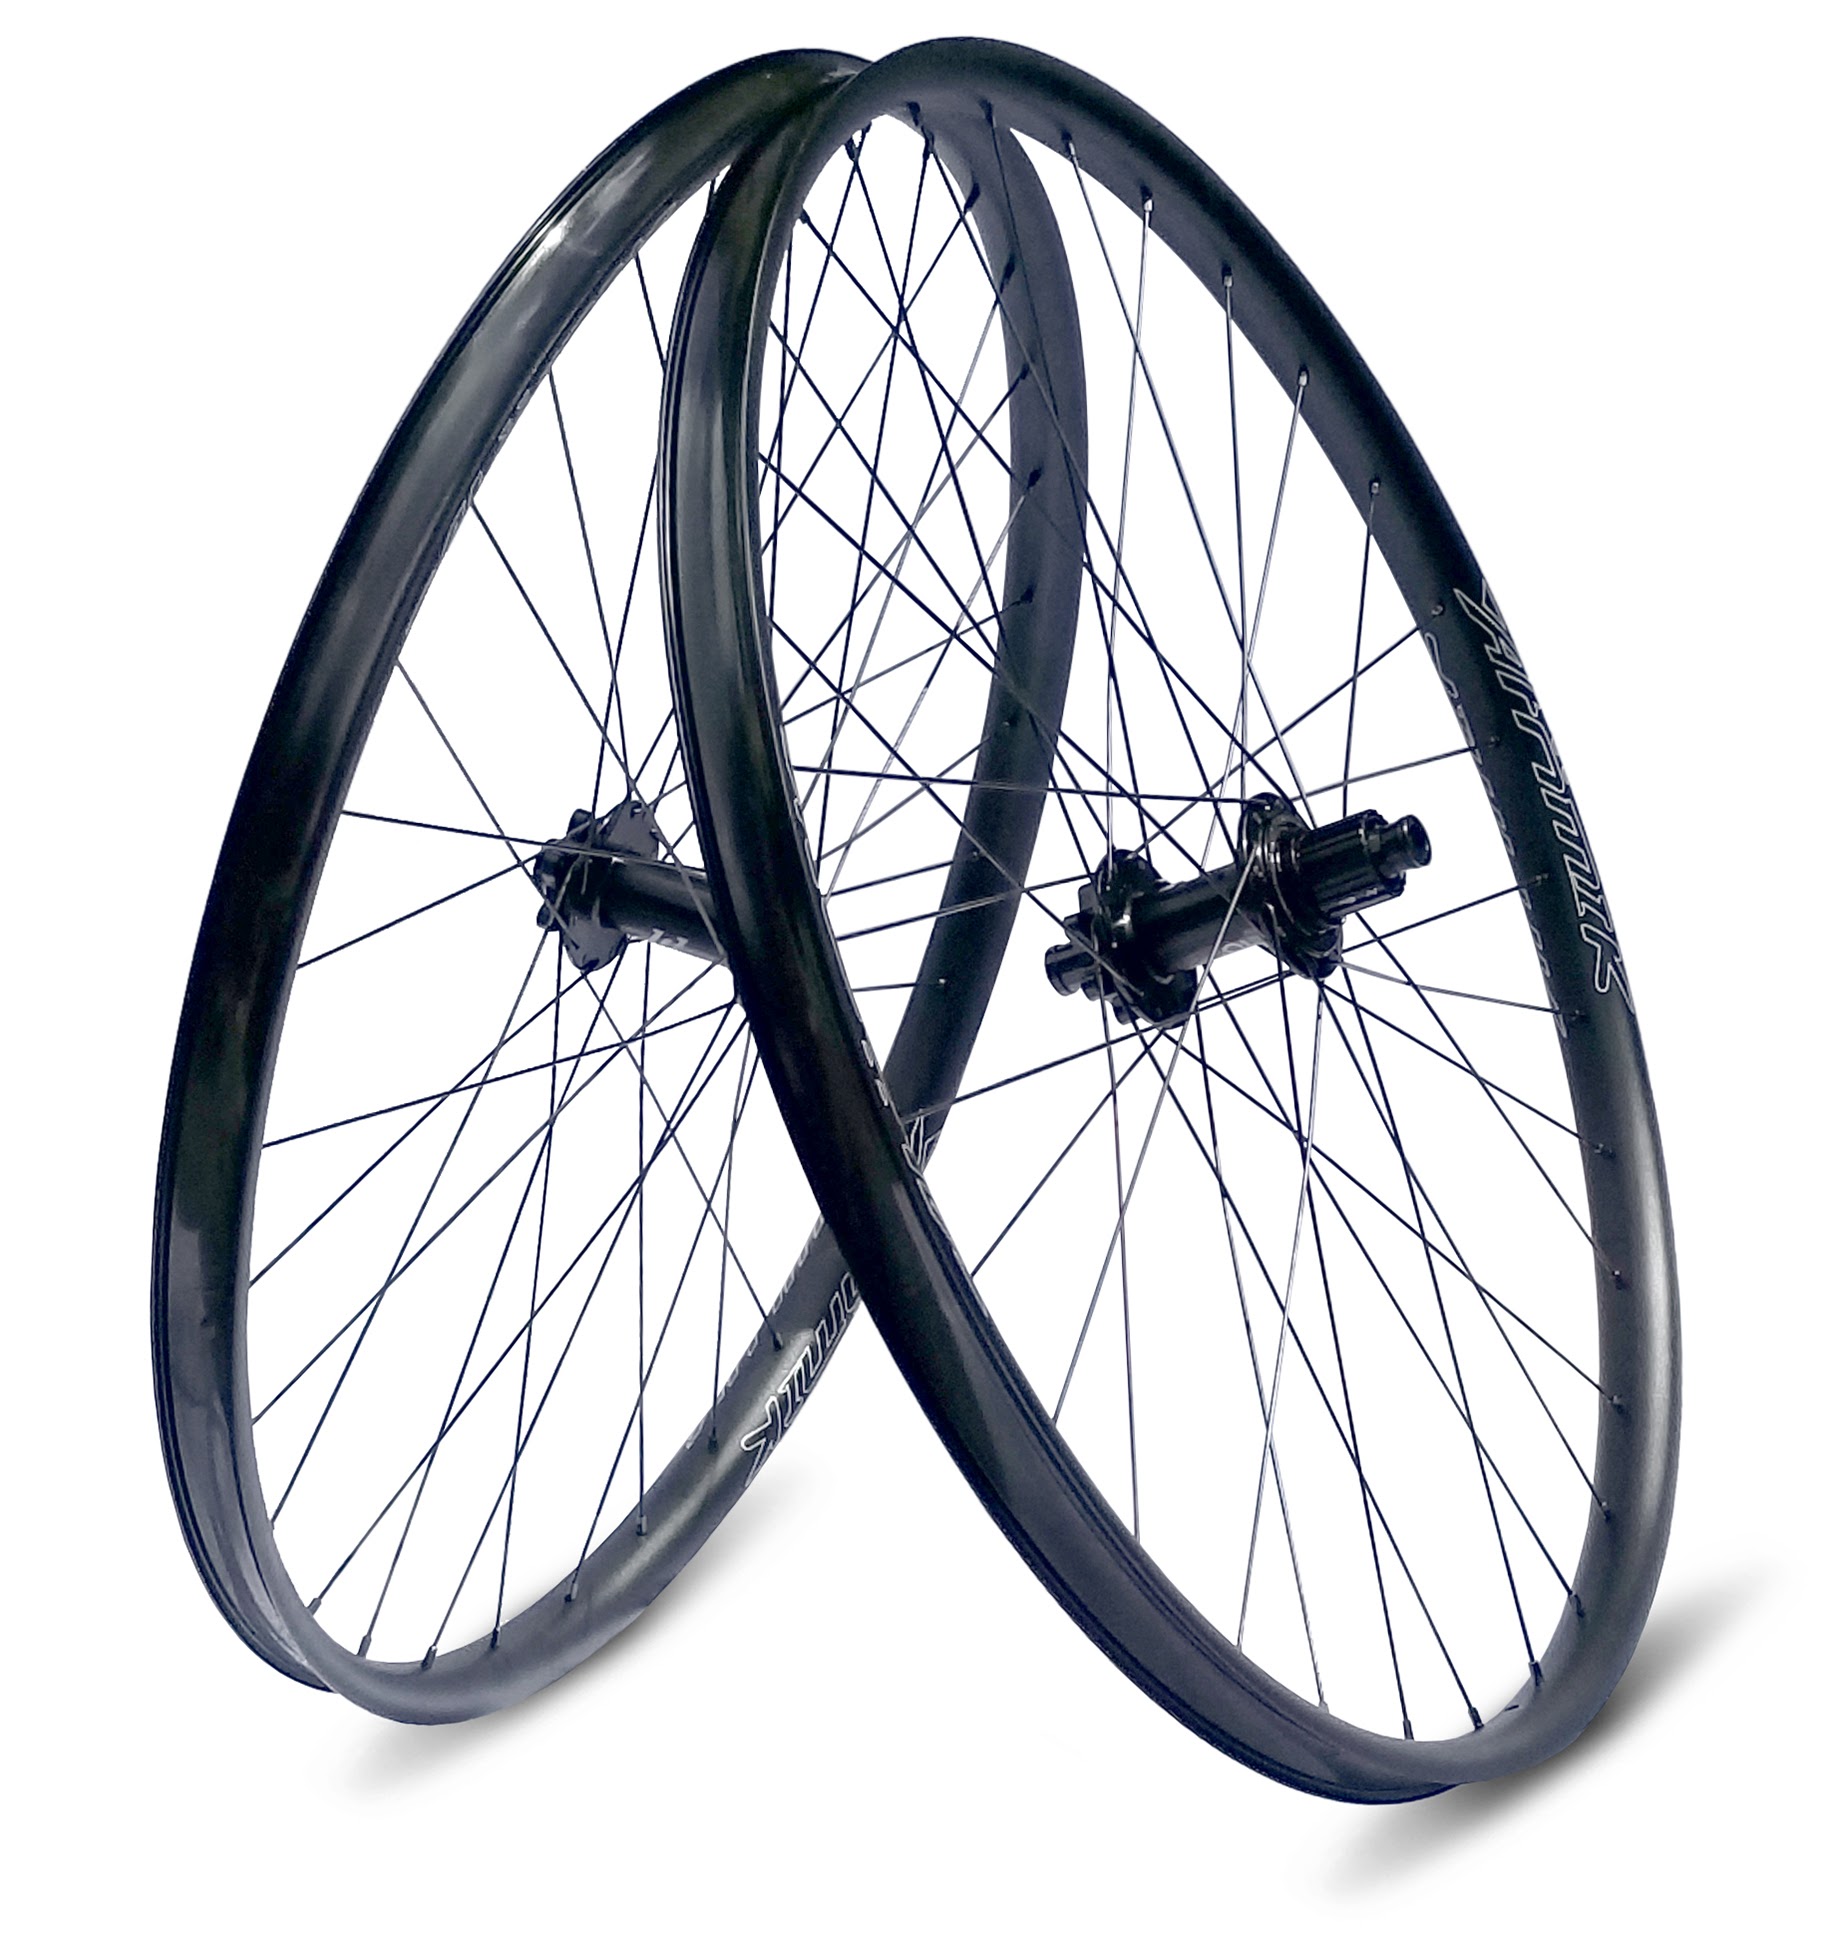 Atomik Carbon adds aluminum AL345 premium mountain bike wheels w/ carbon upgrade program